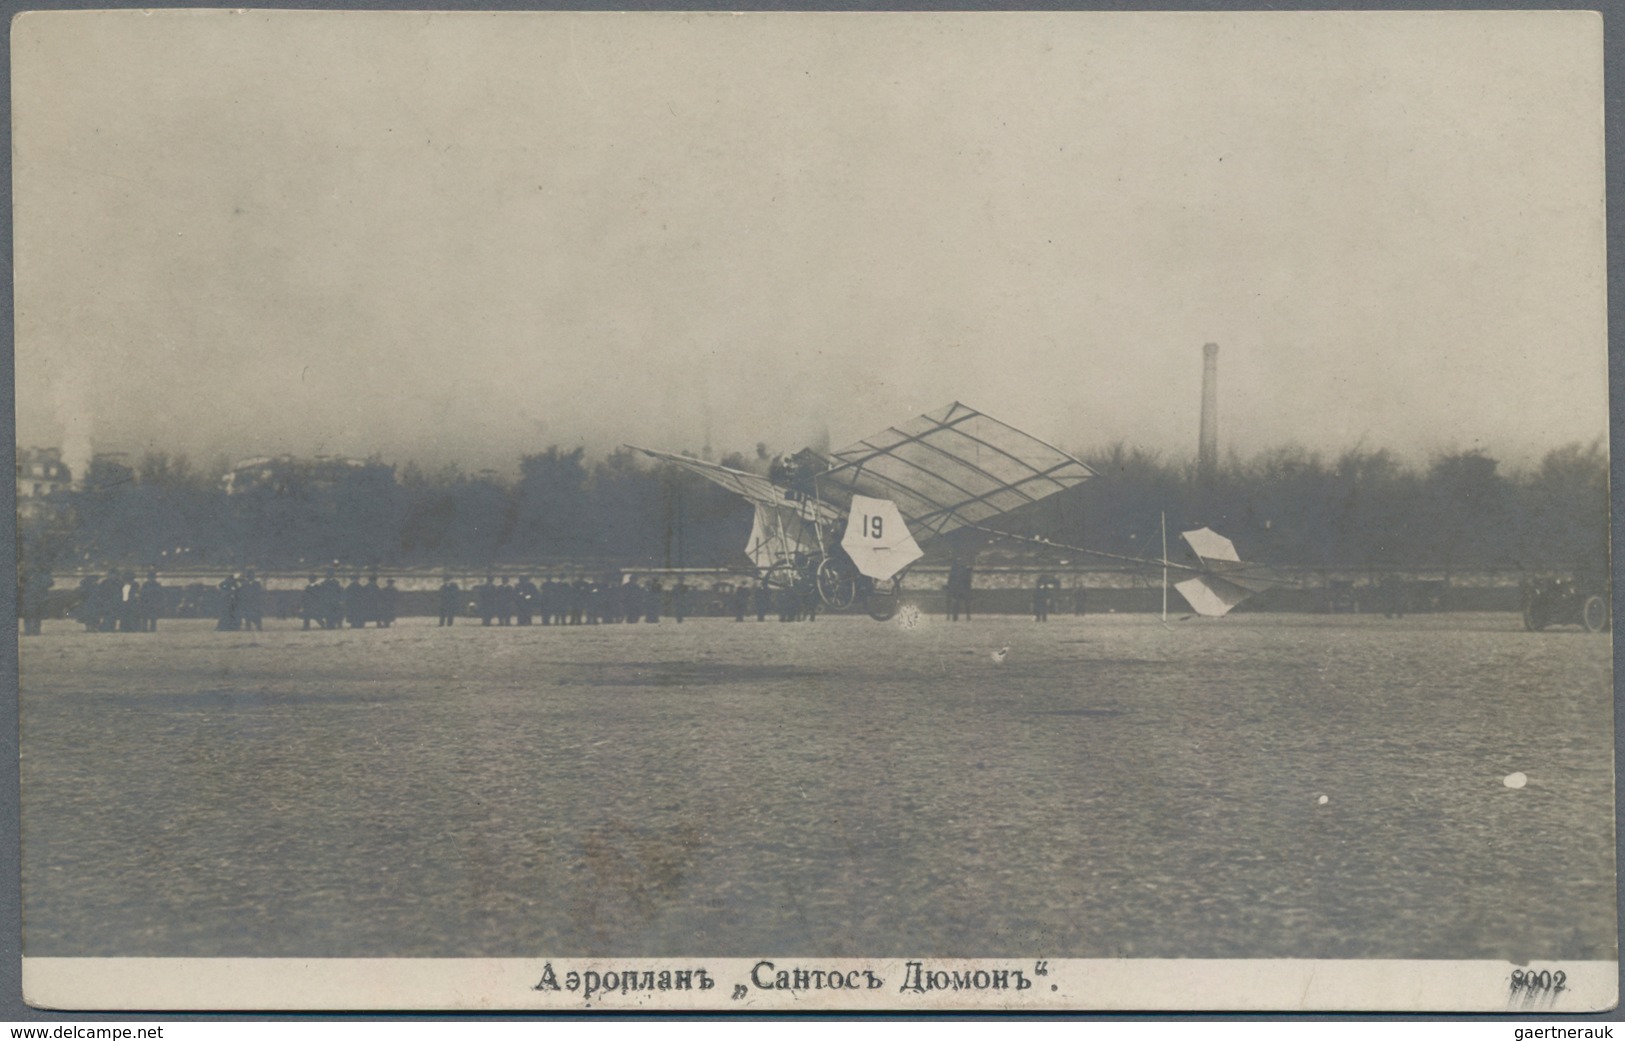 Ansichtskarten: Motive / Thematics: 1909/1912, nine ppc showing Russian flight pioneers.